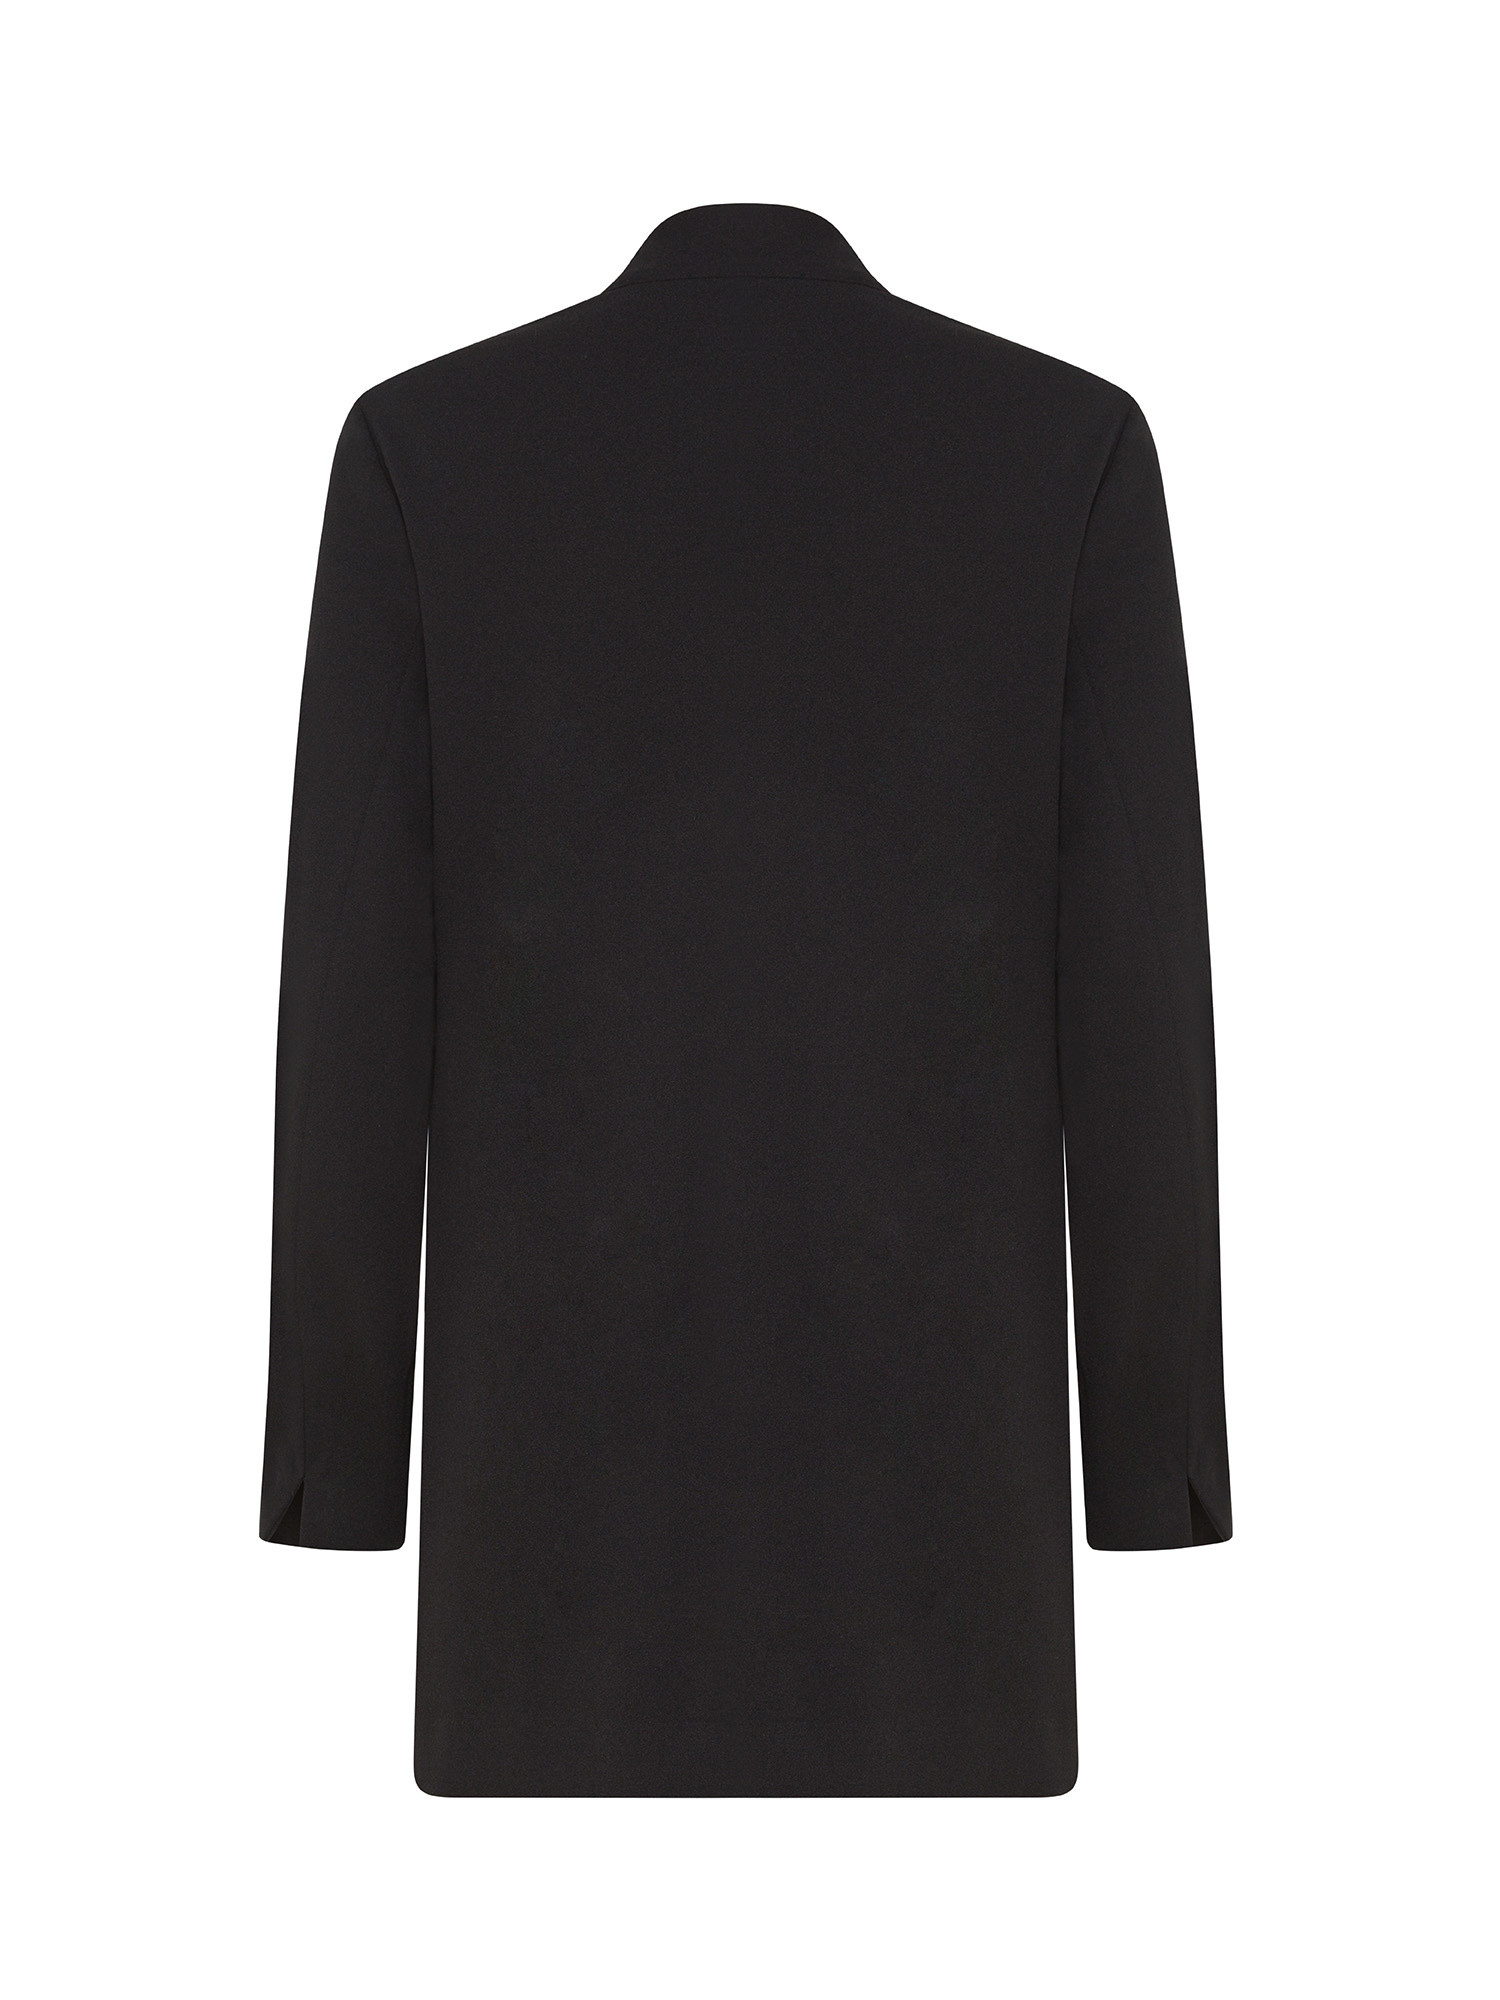 Koan - Long crepe jacket, Black, large image number 1